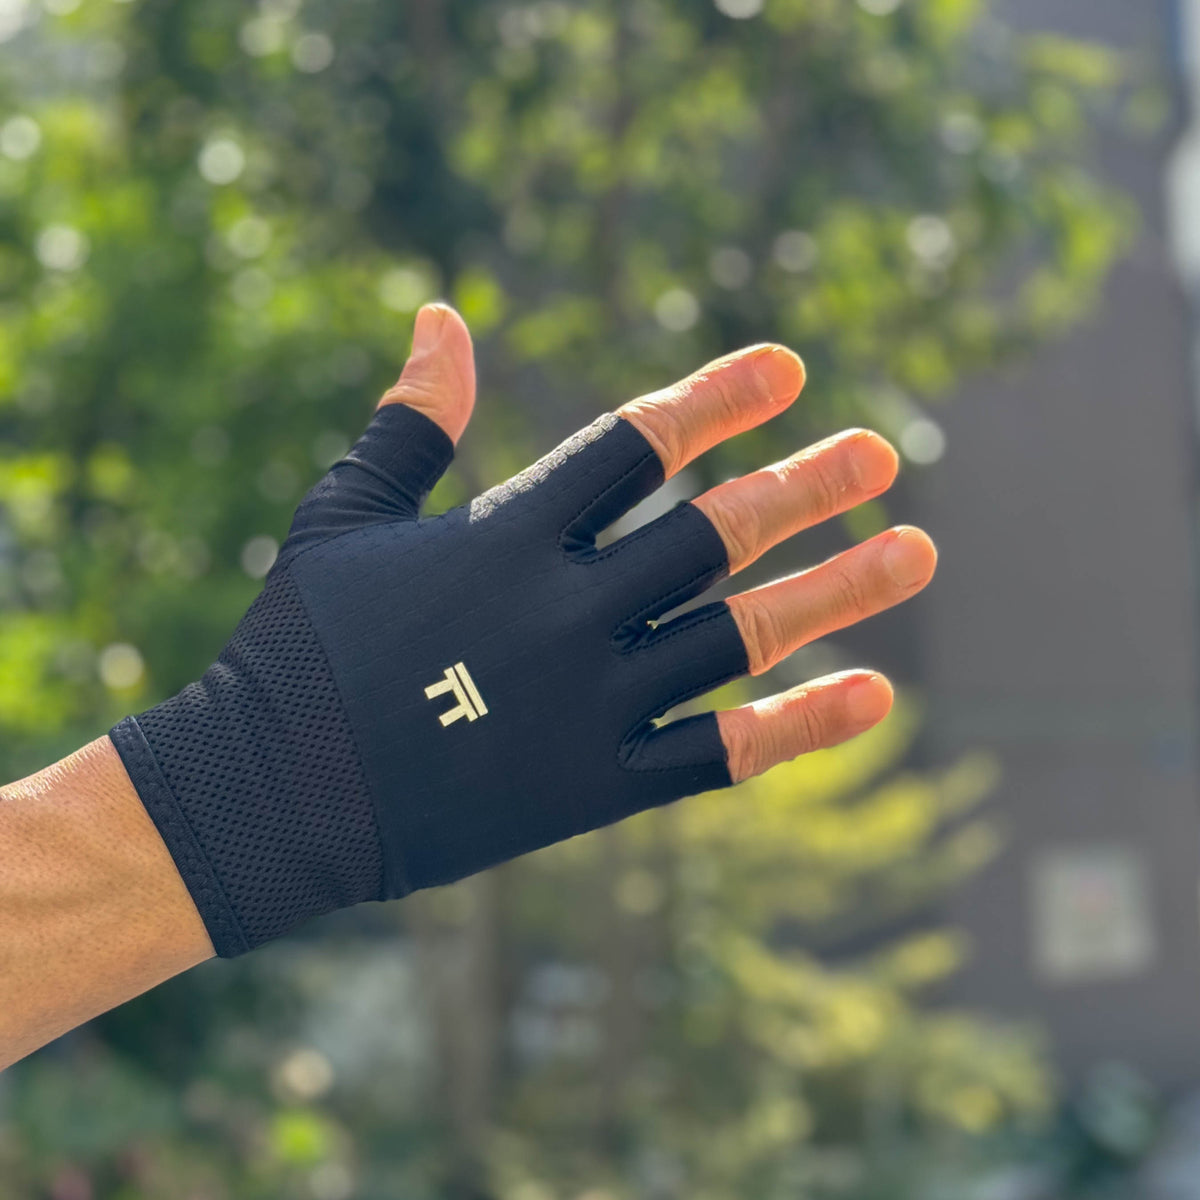 T2 Trail Glove / Black